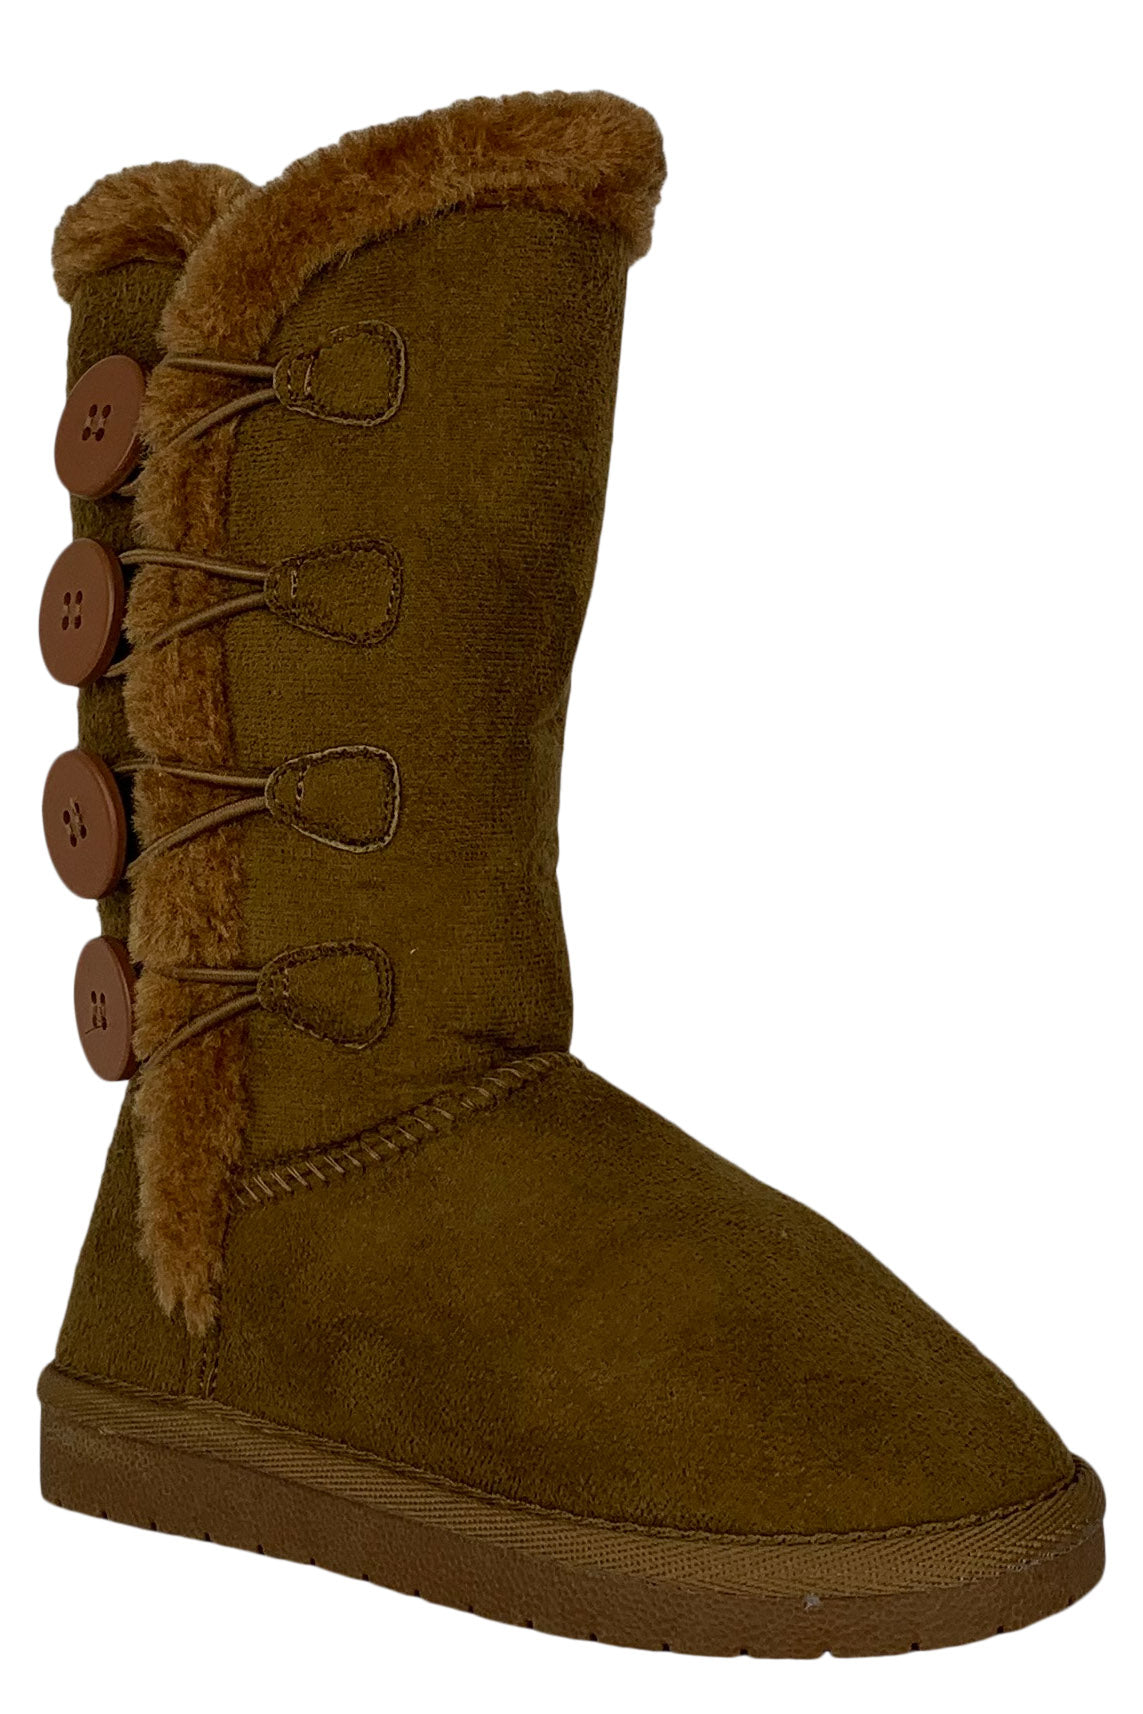 children winter boots in tan anissa-3k forever link